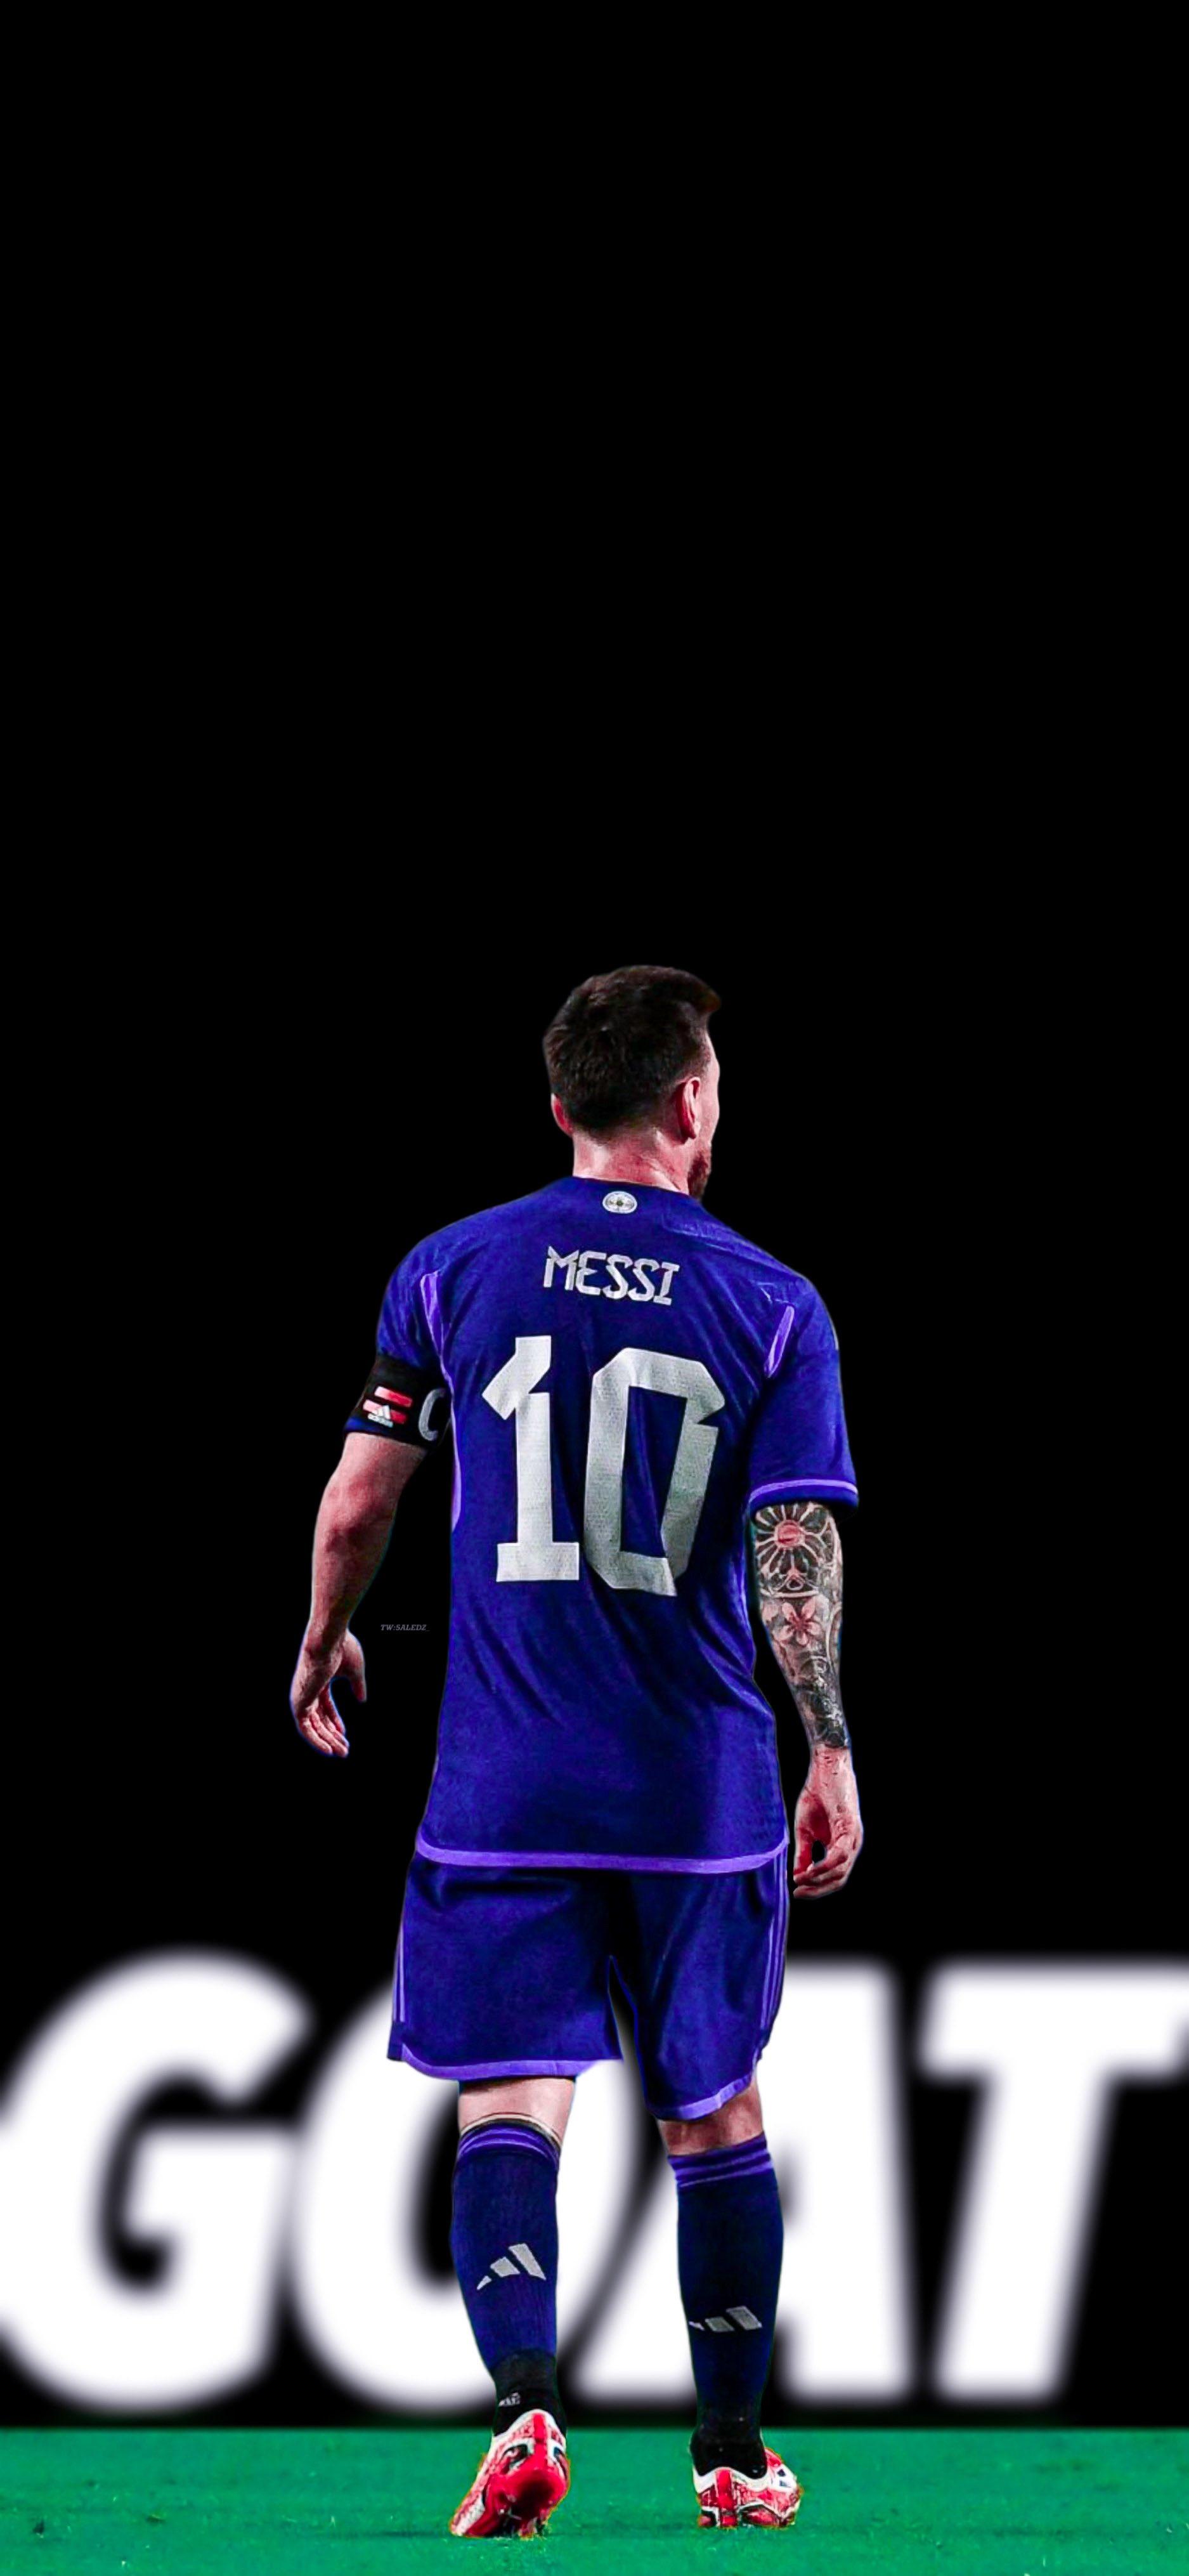 Background Messi Wallpaper - EnWallpaper